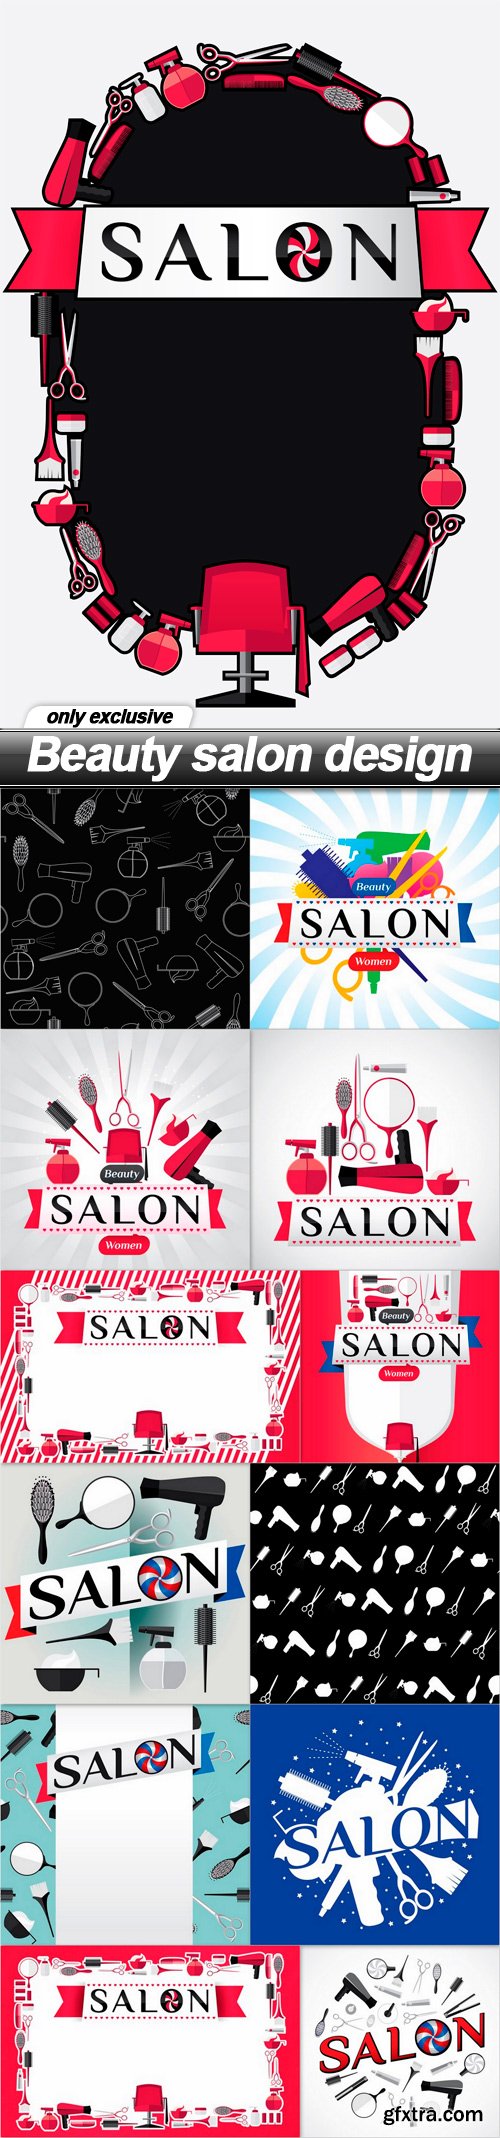 Beauty salon design - 13 EPS